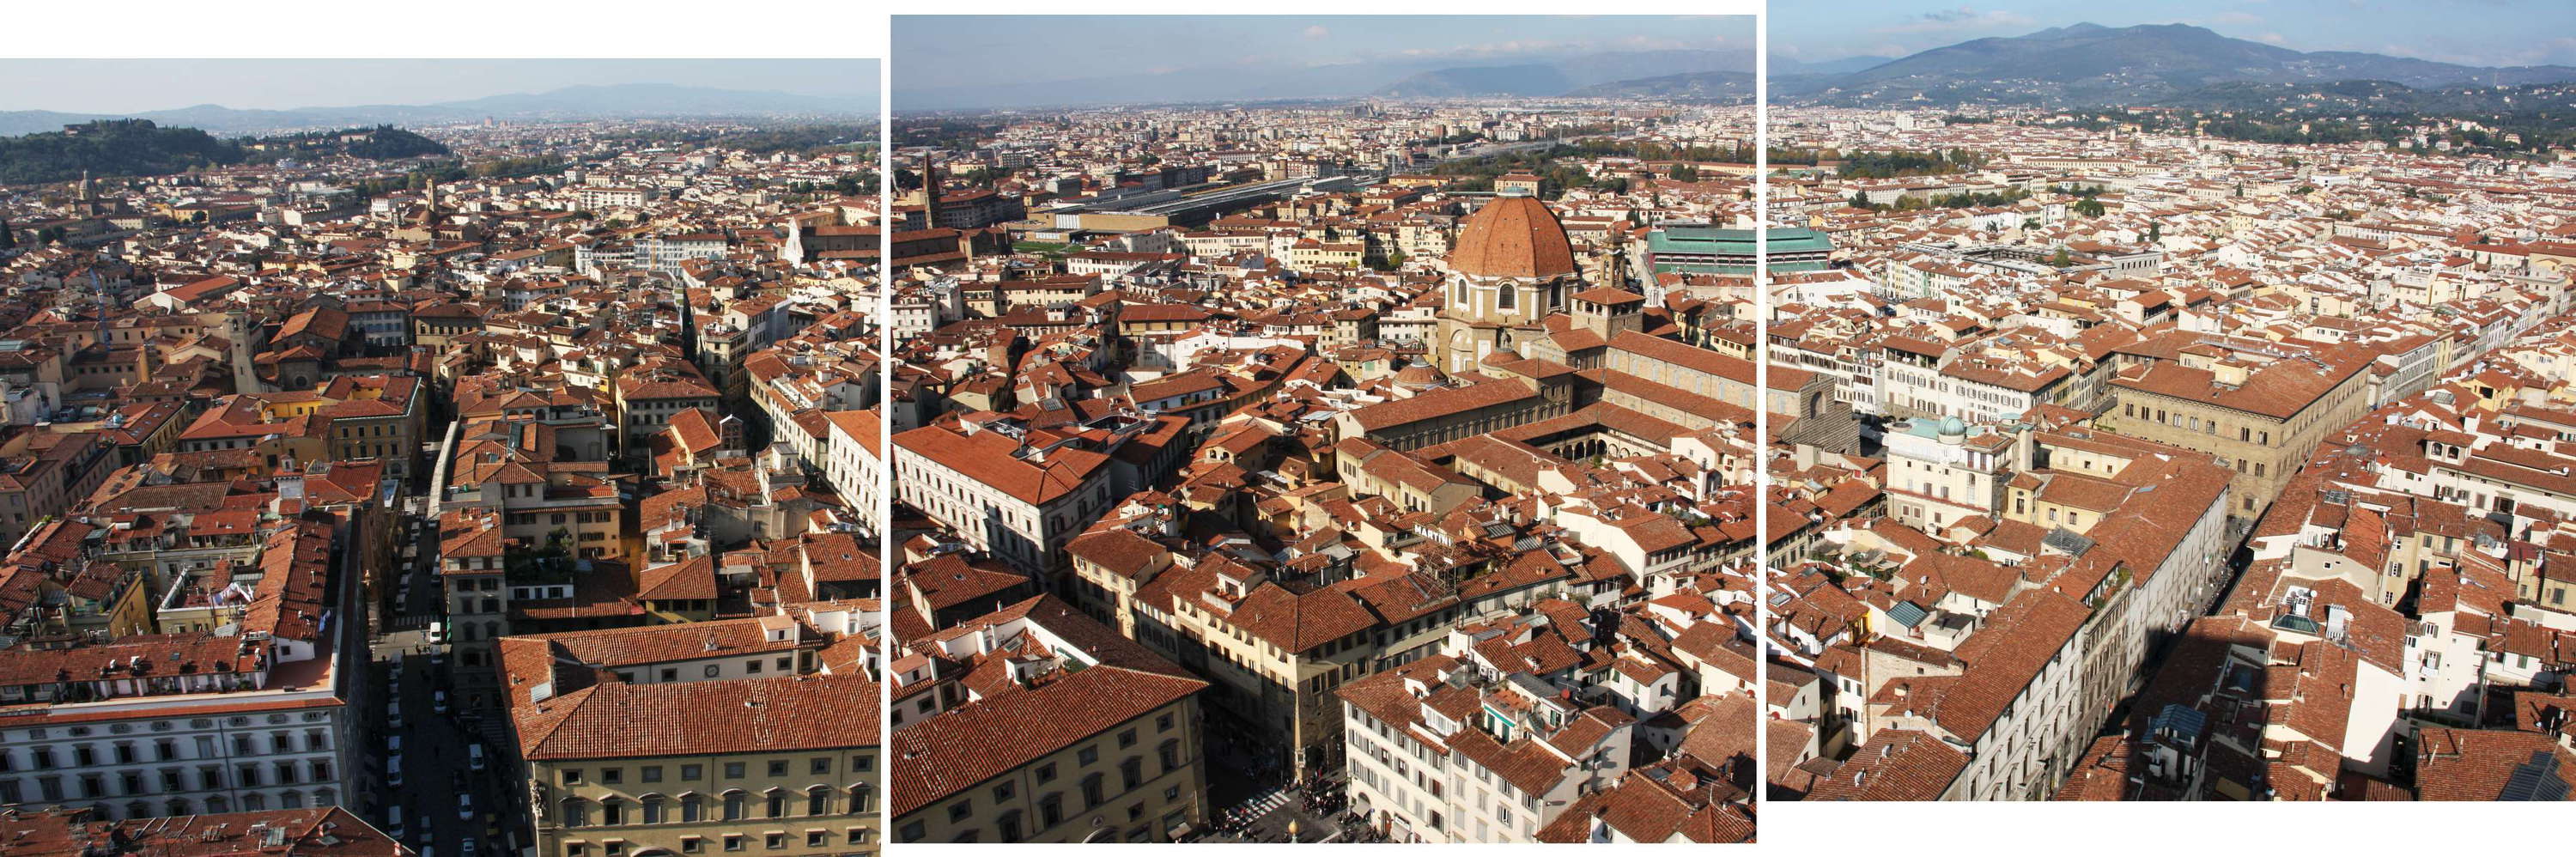 Firenze | City panorama